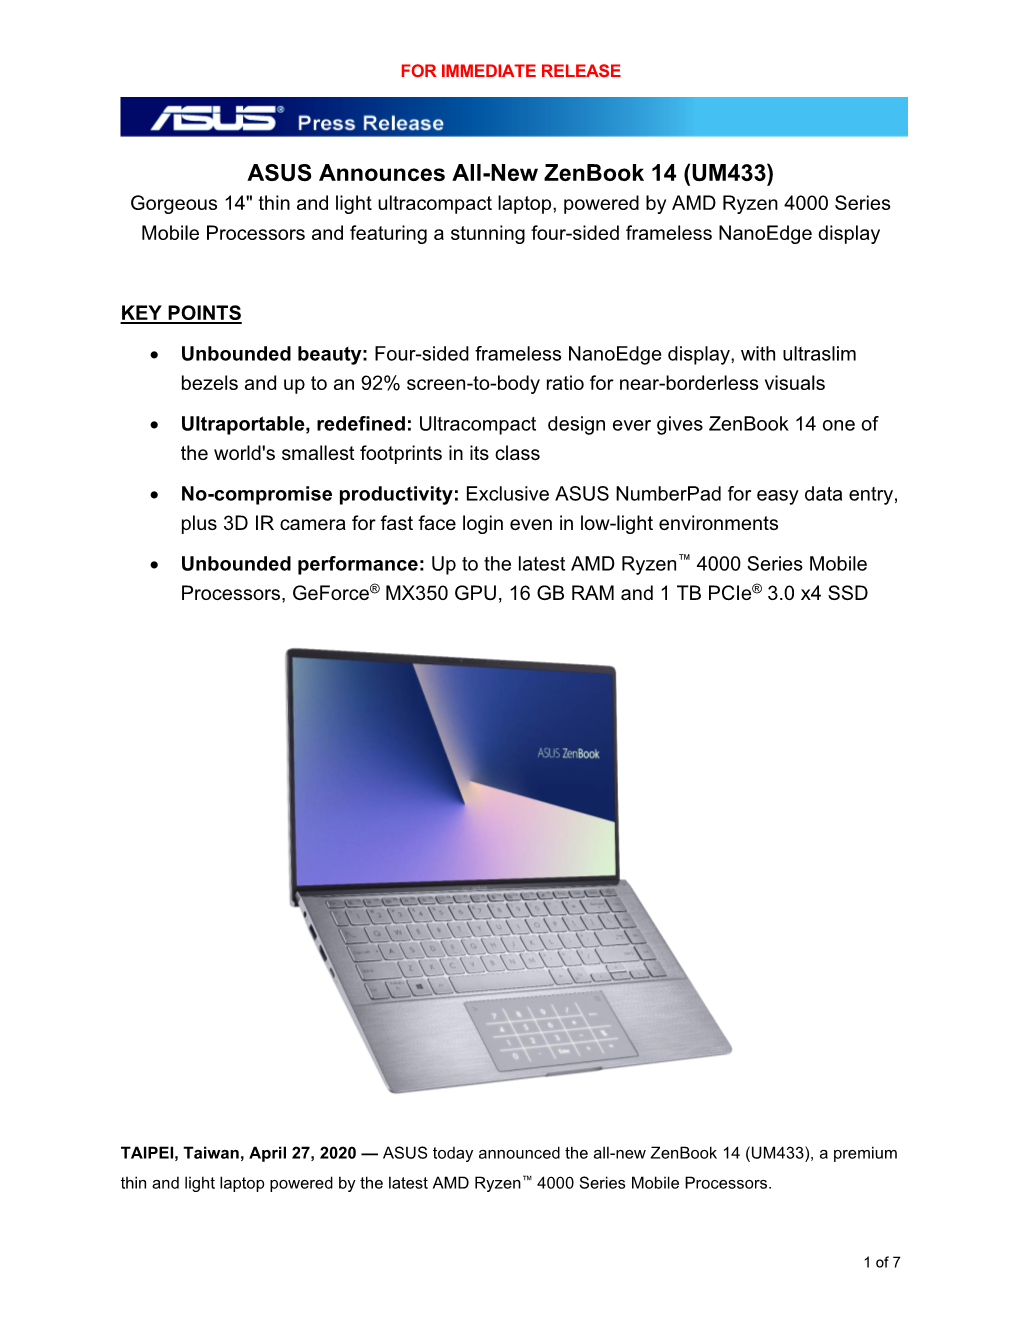 ASUS Announces All-New Zenbook 14 (UM433)